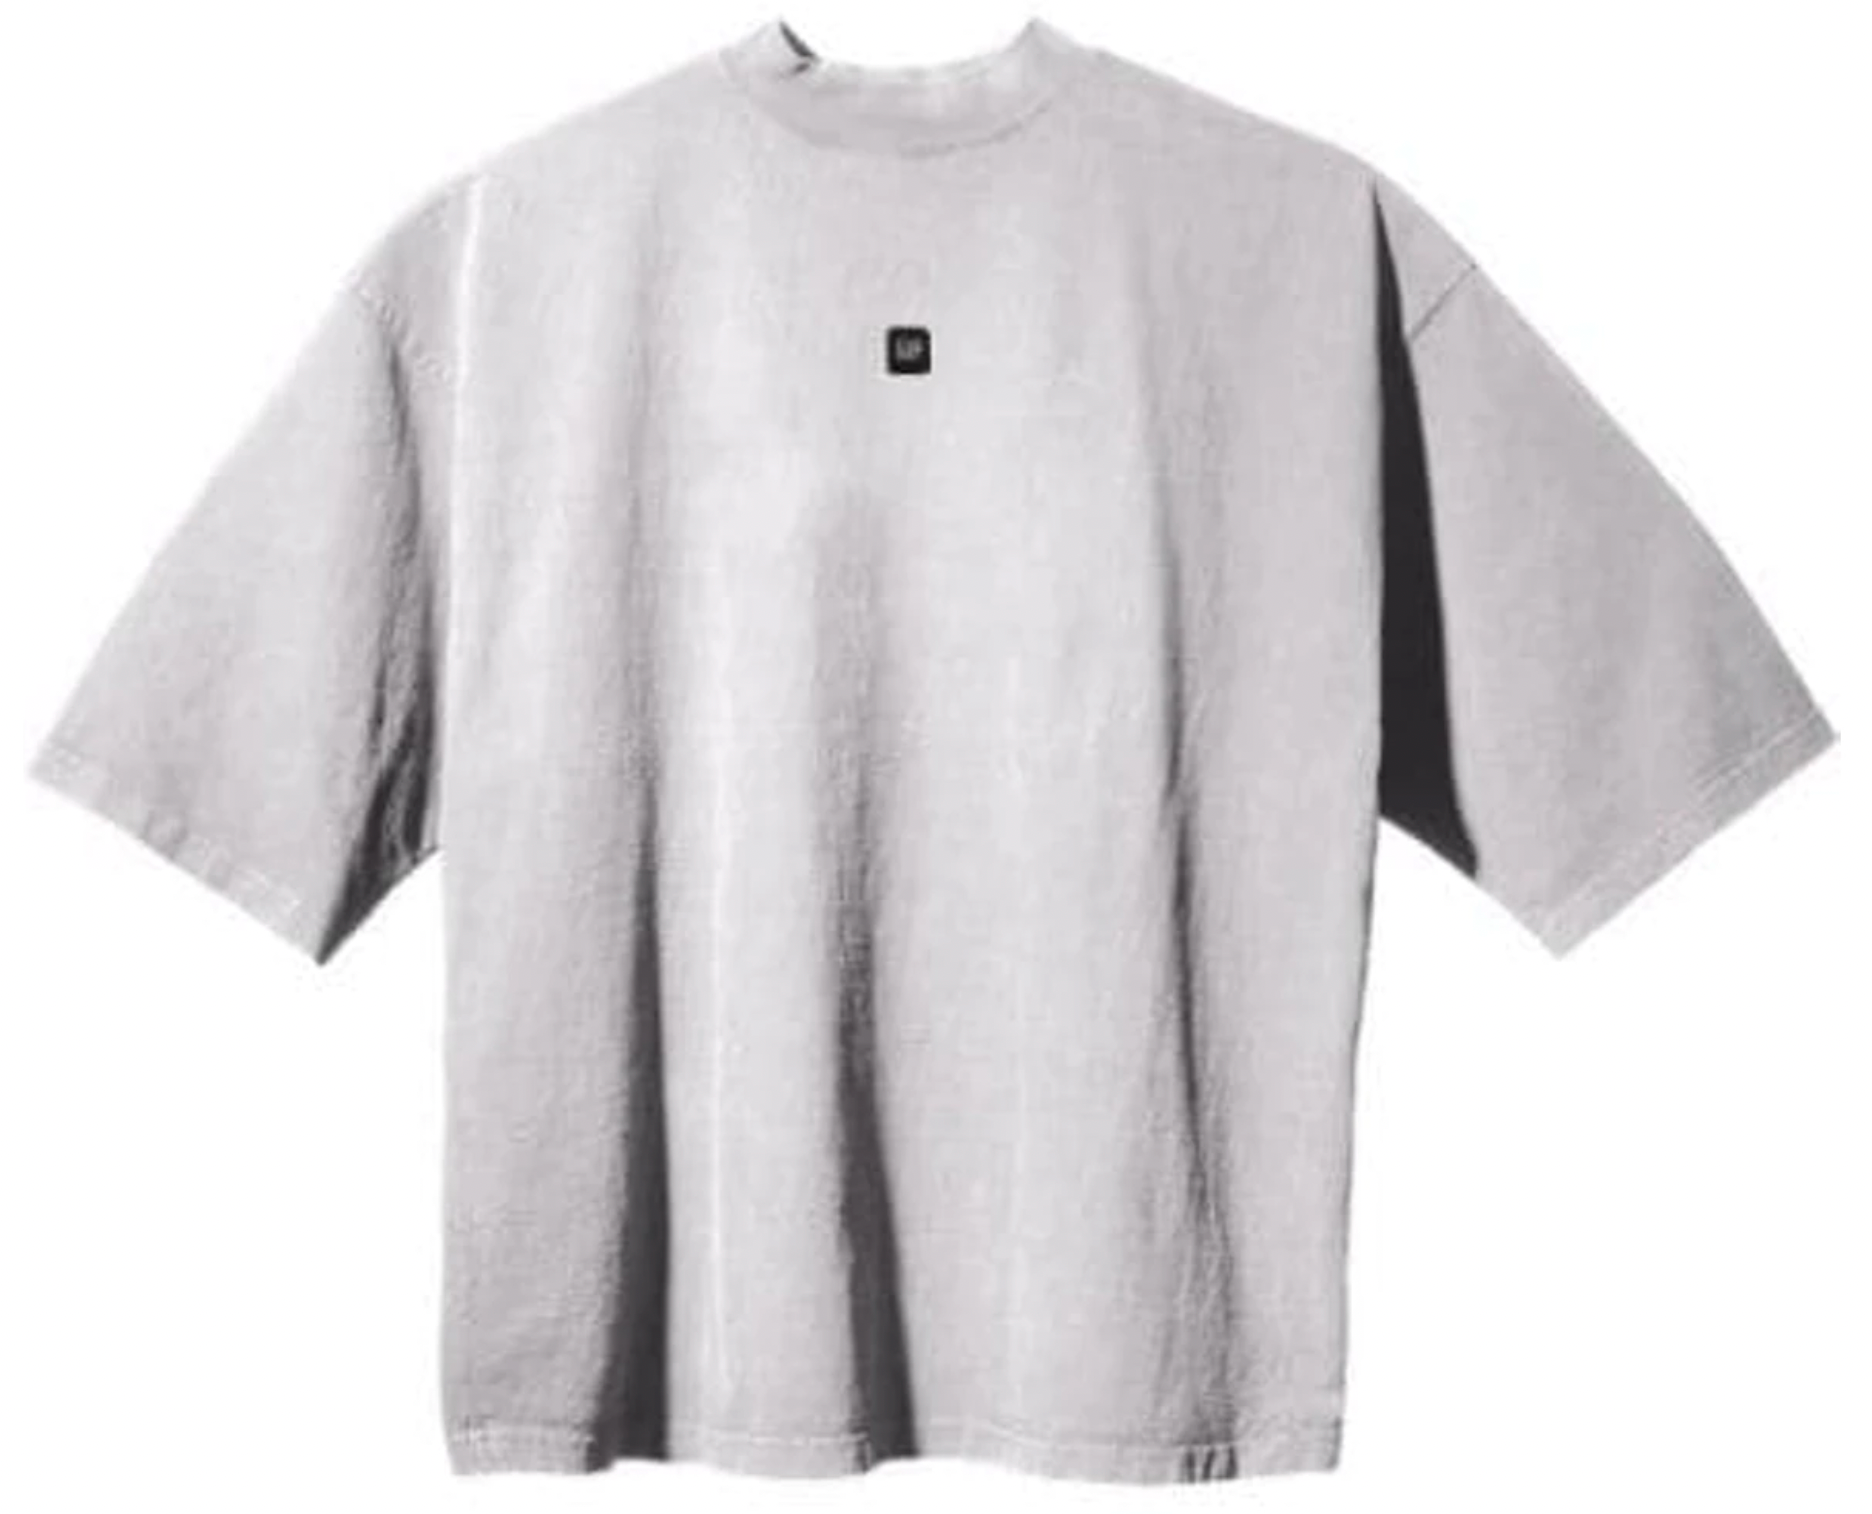 Yeezy Gap Engineered By Balenciaga Logo 3/4 Sleeve T-Shirt White - Size: XL